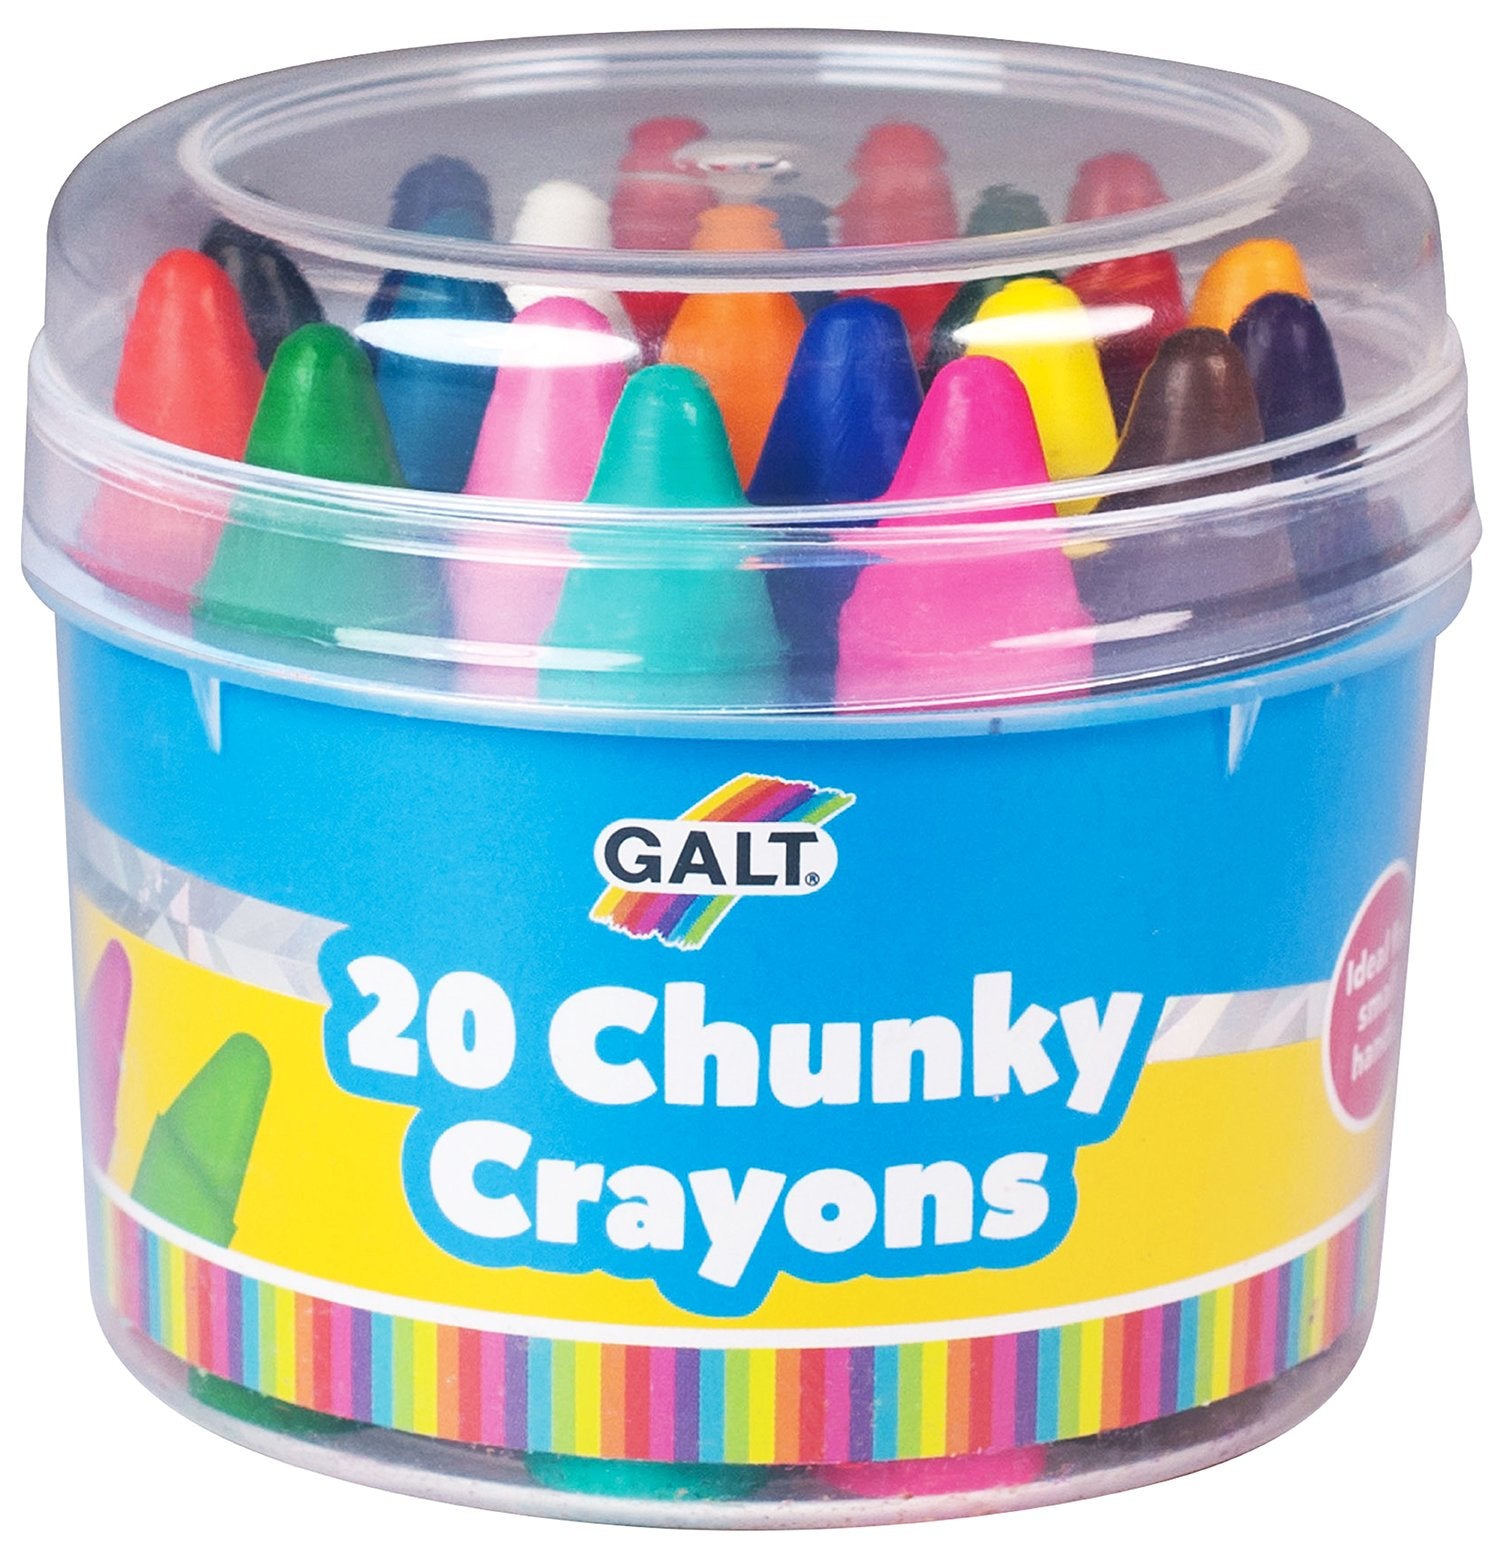 20 Chunky Crayons - Galt